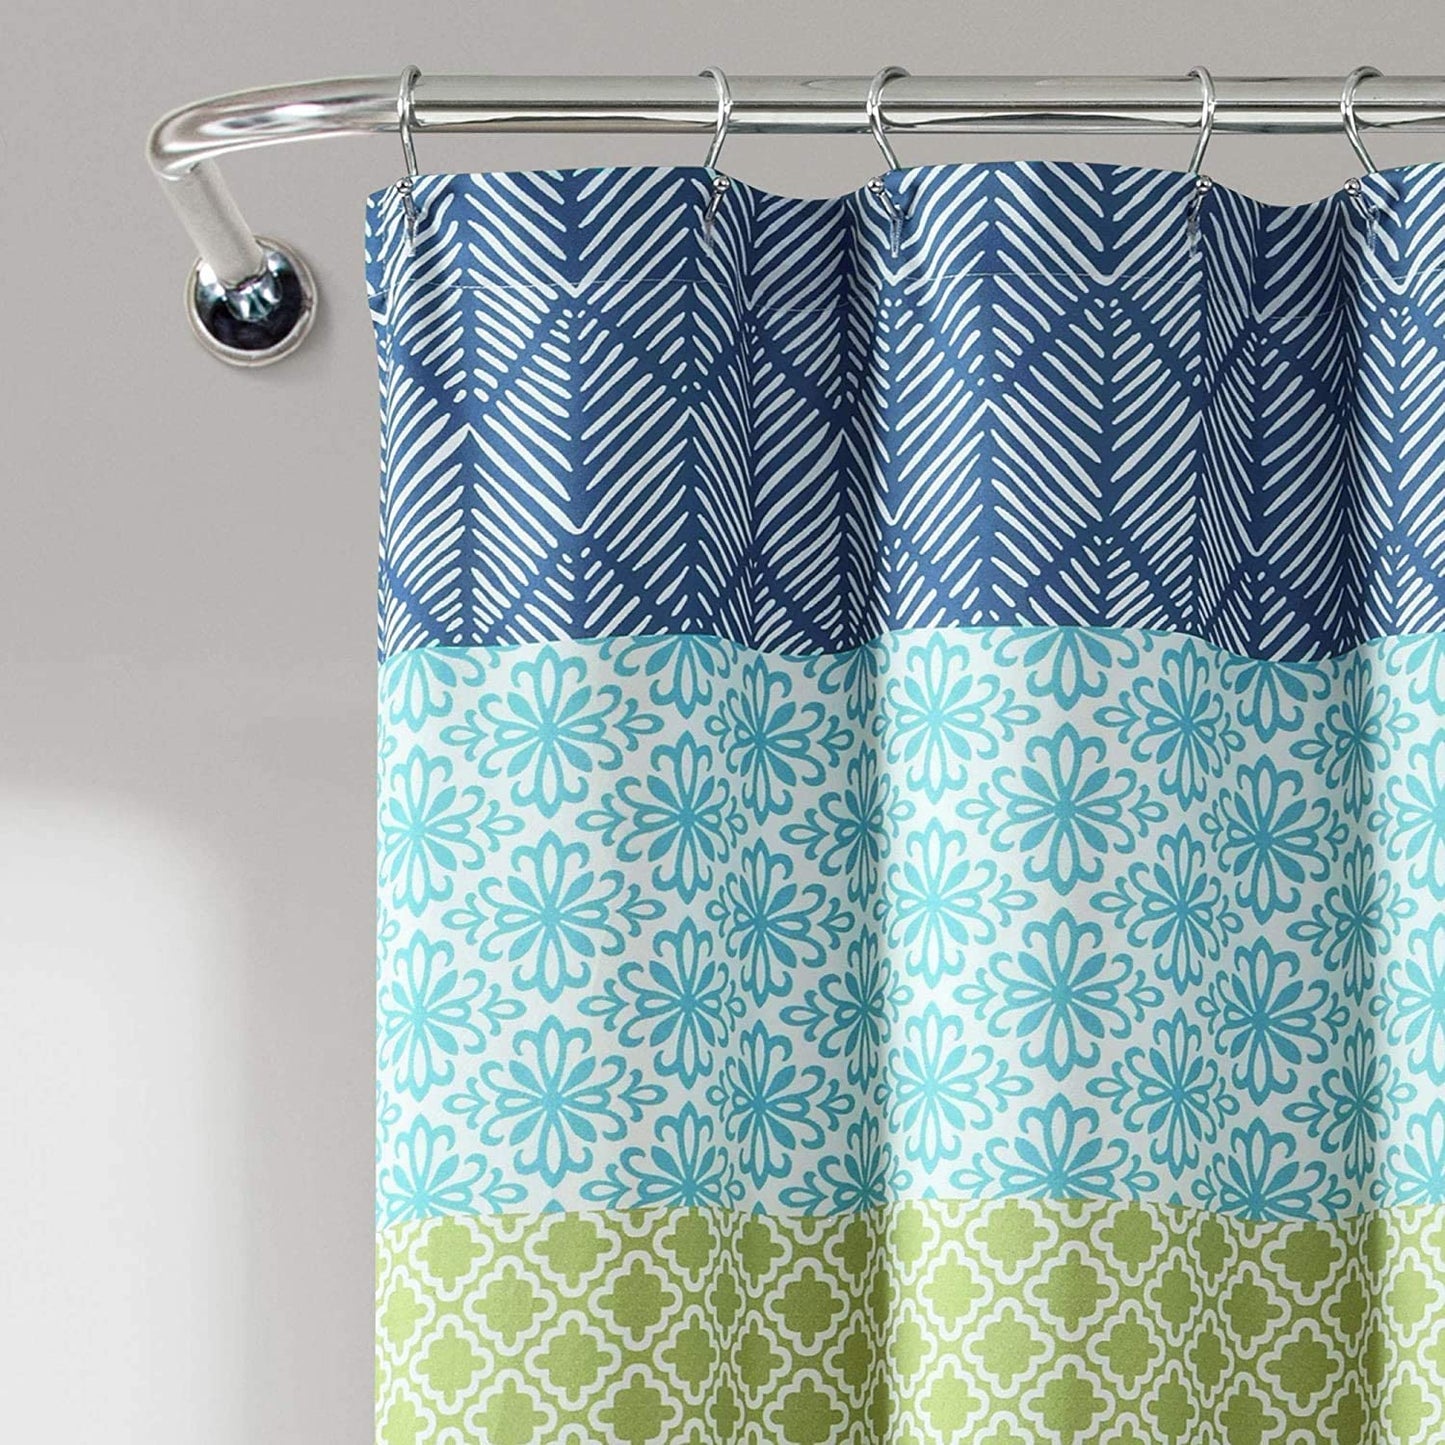 Bohemian Stripe Shower Curtain, 72" W X 72" L, Blue & Green - Boho Shower Curtain - Colorful Striped Bathroom Curtain - Maximalist & Boho Bathroom Decor